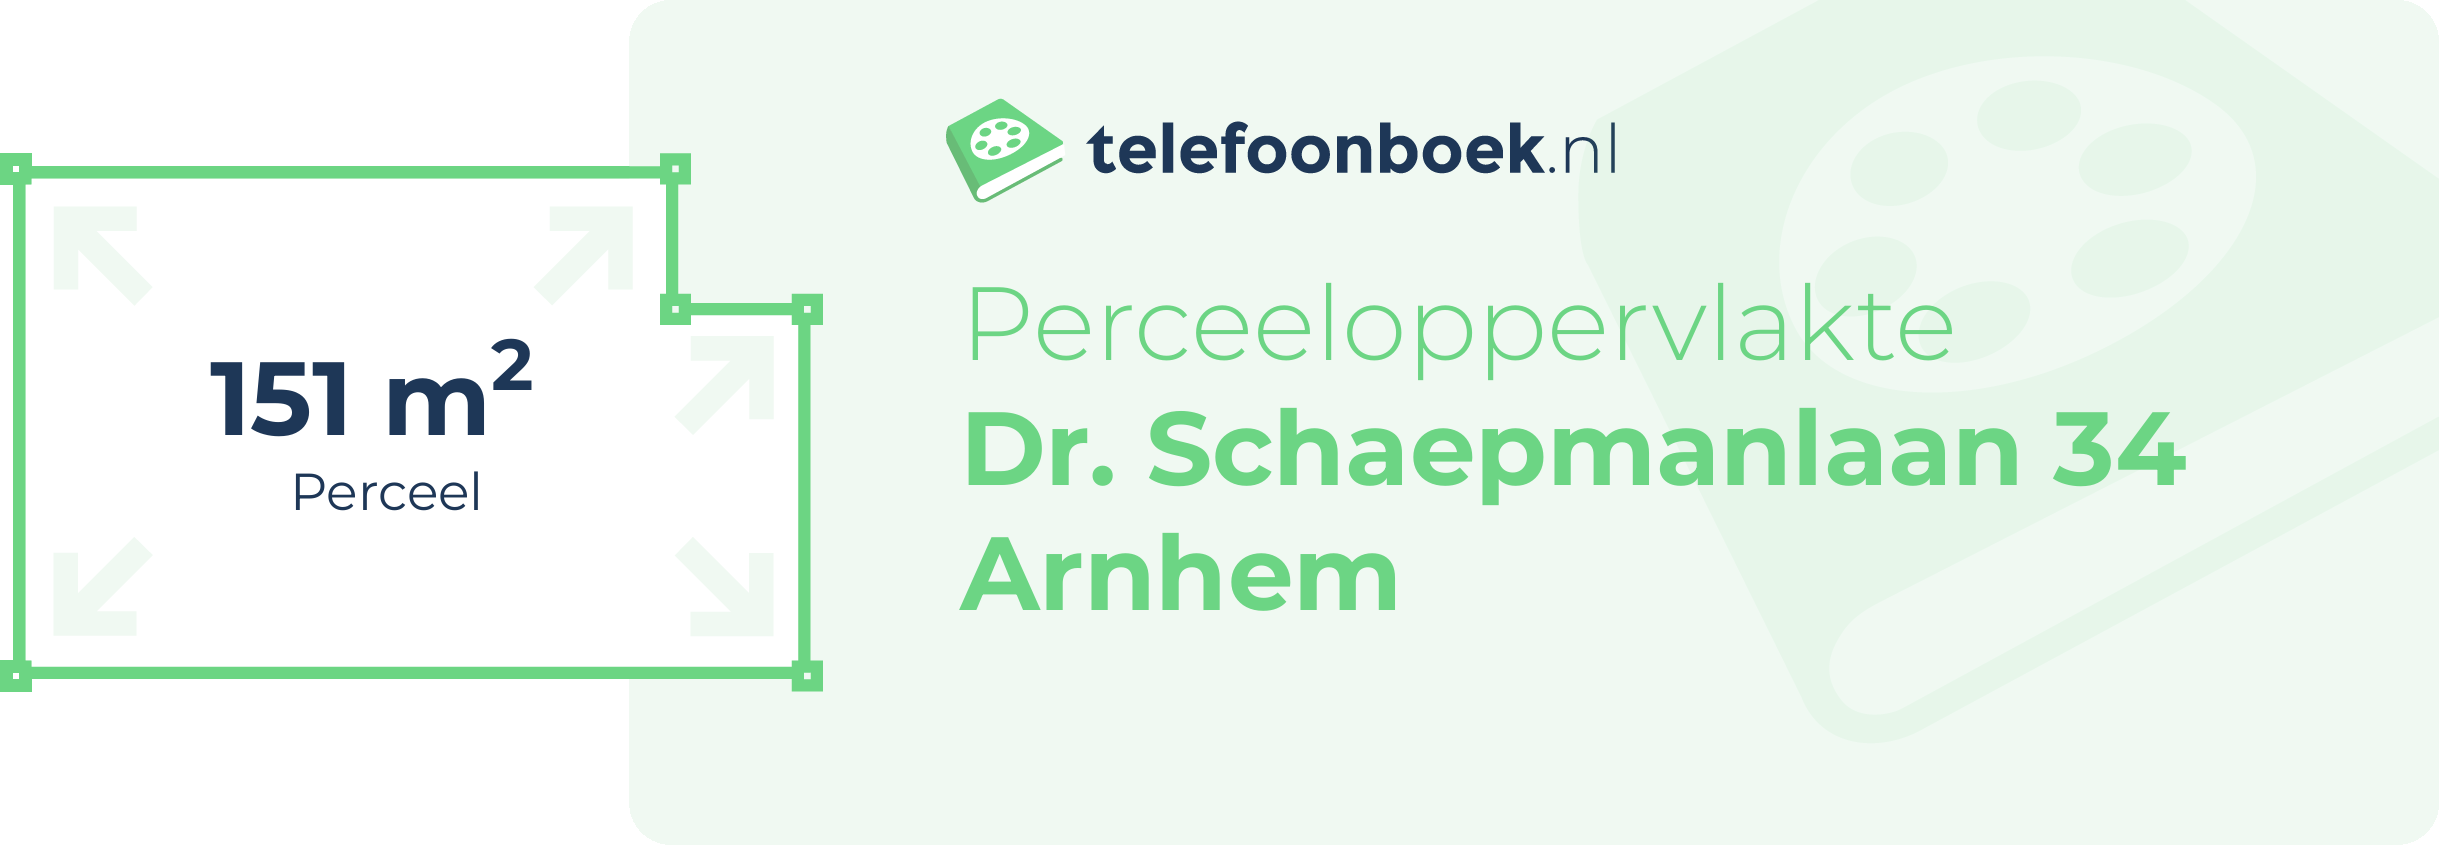 Perceeloppervlakte Dr. Schaepmanlaan 34 Arnhem